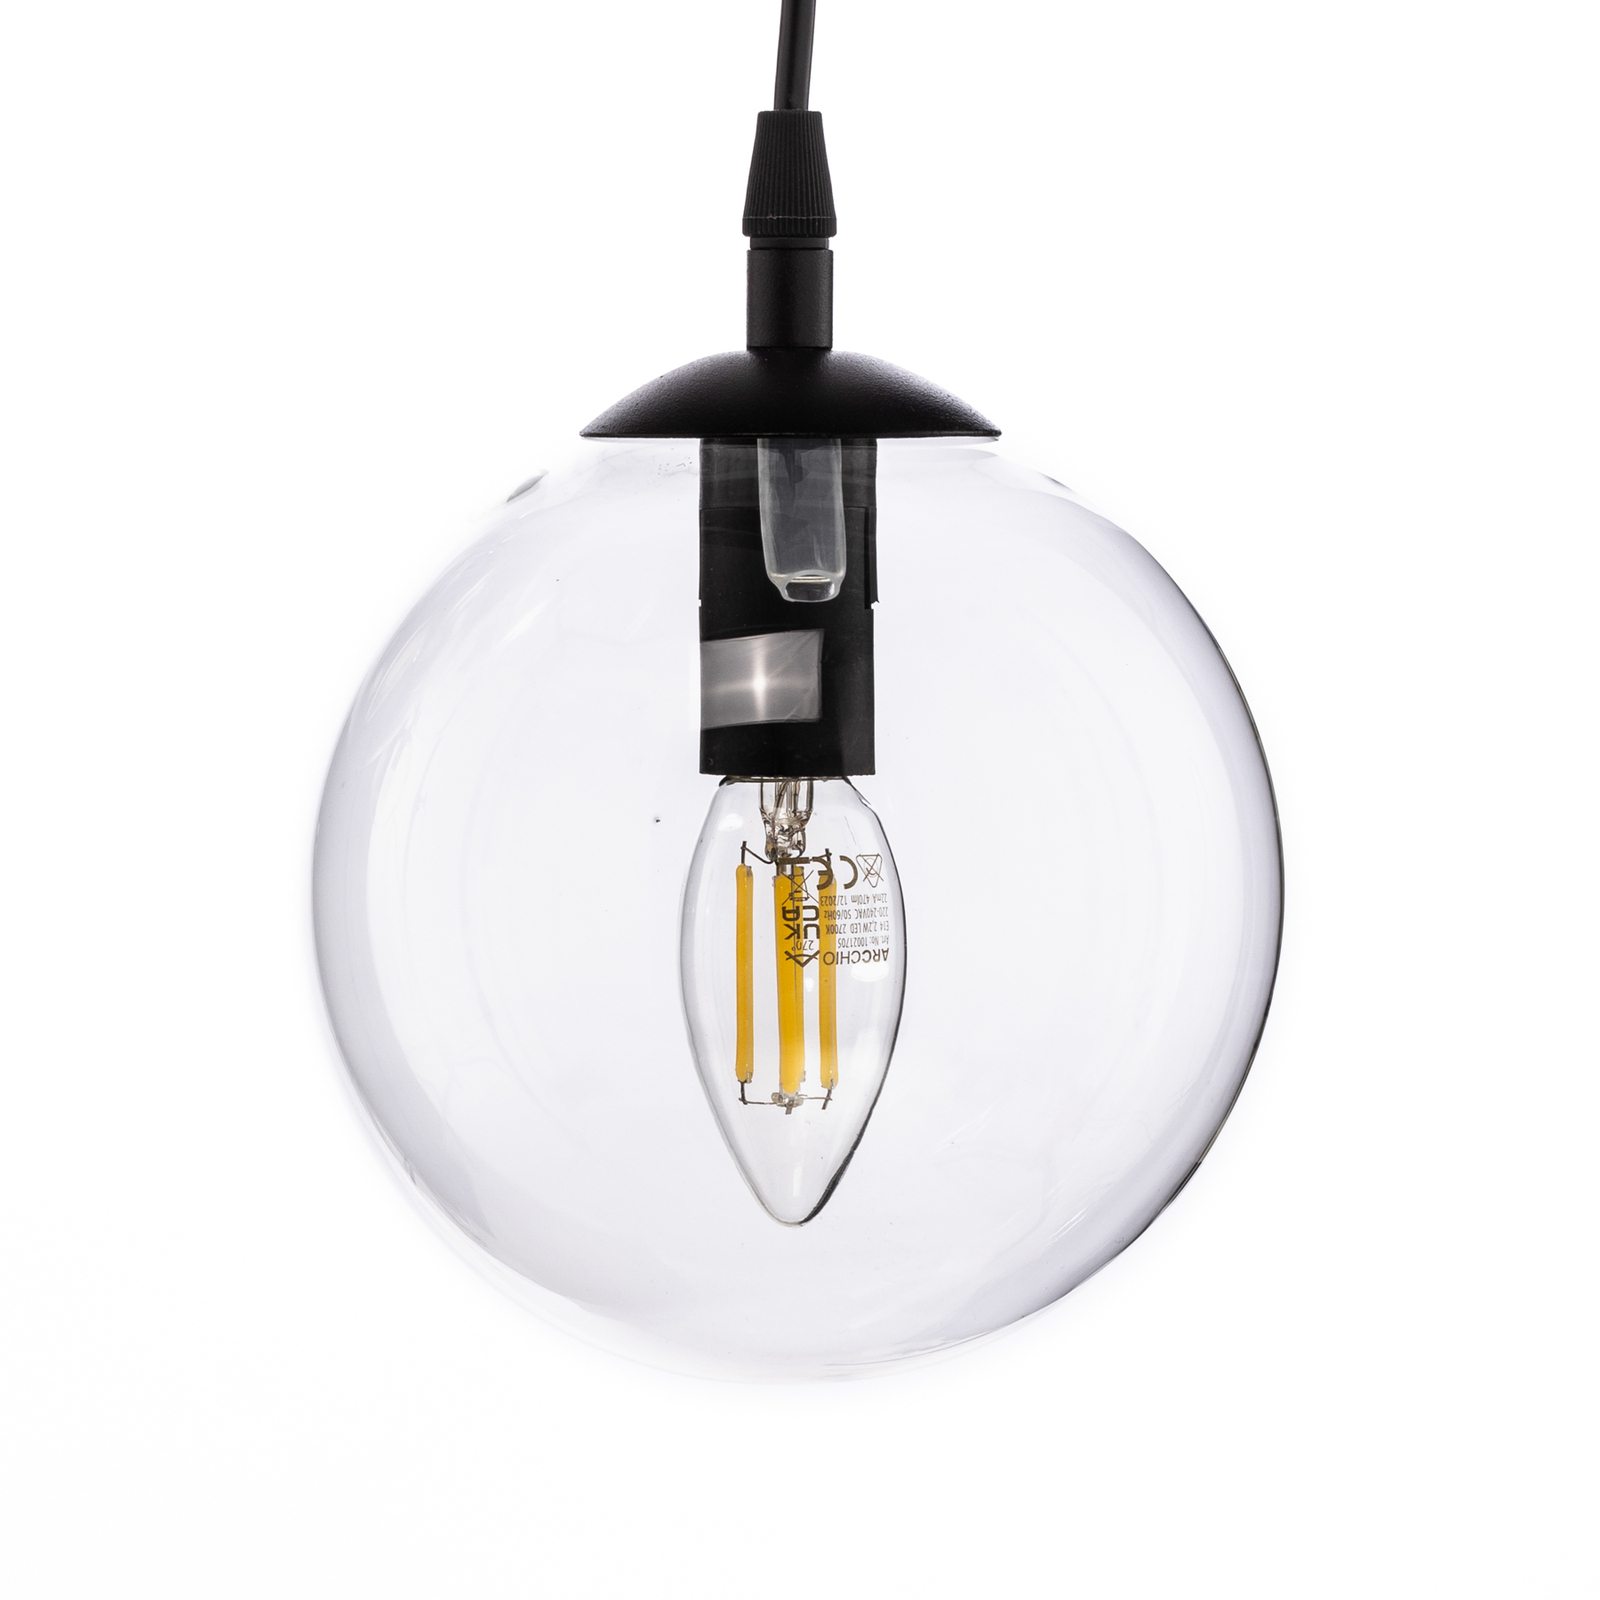 Glassy hanglamp, 6-lamps, zwart, grafiet, glas, 75 cm